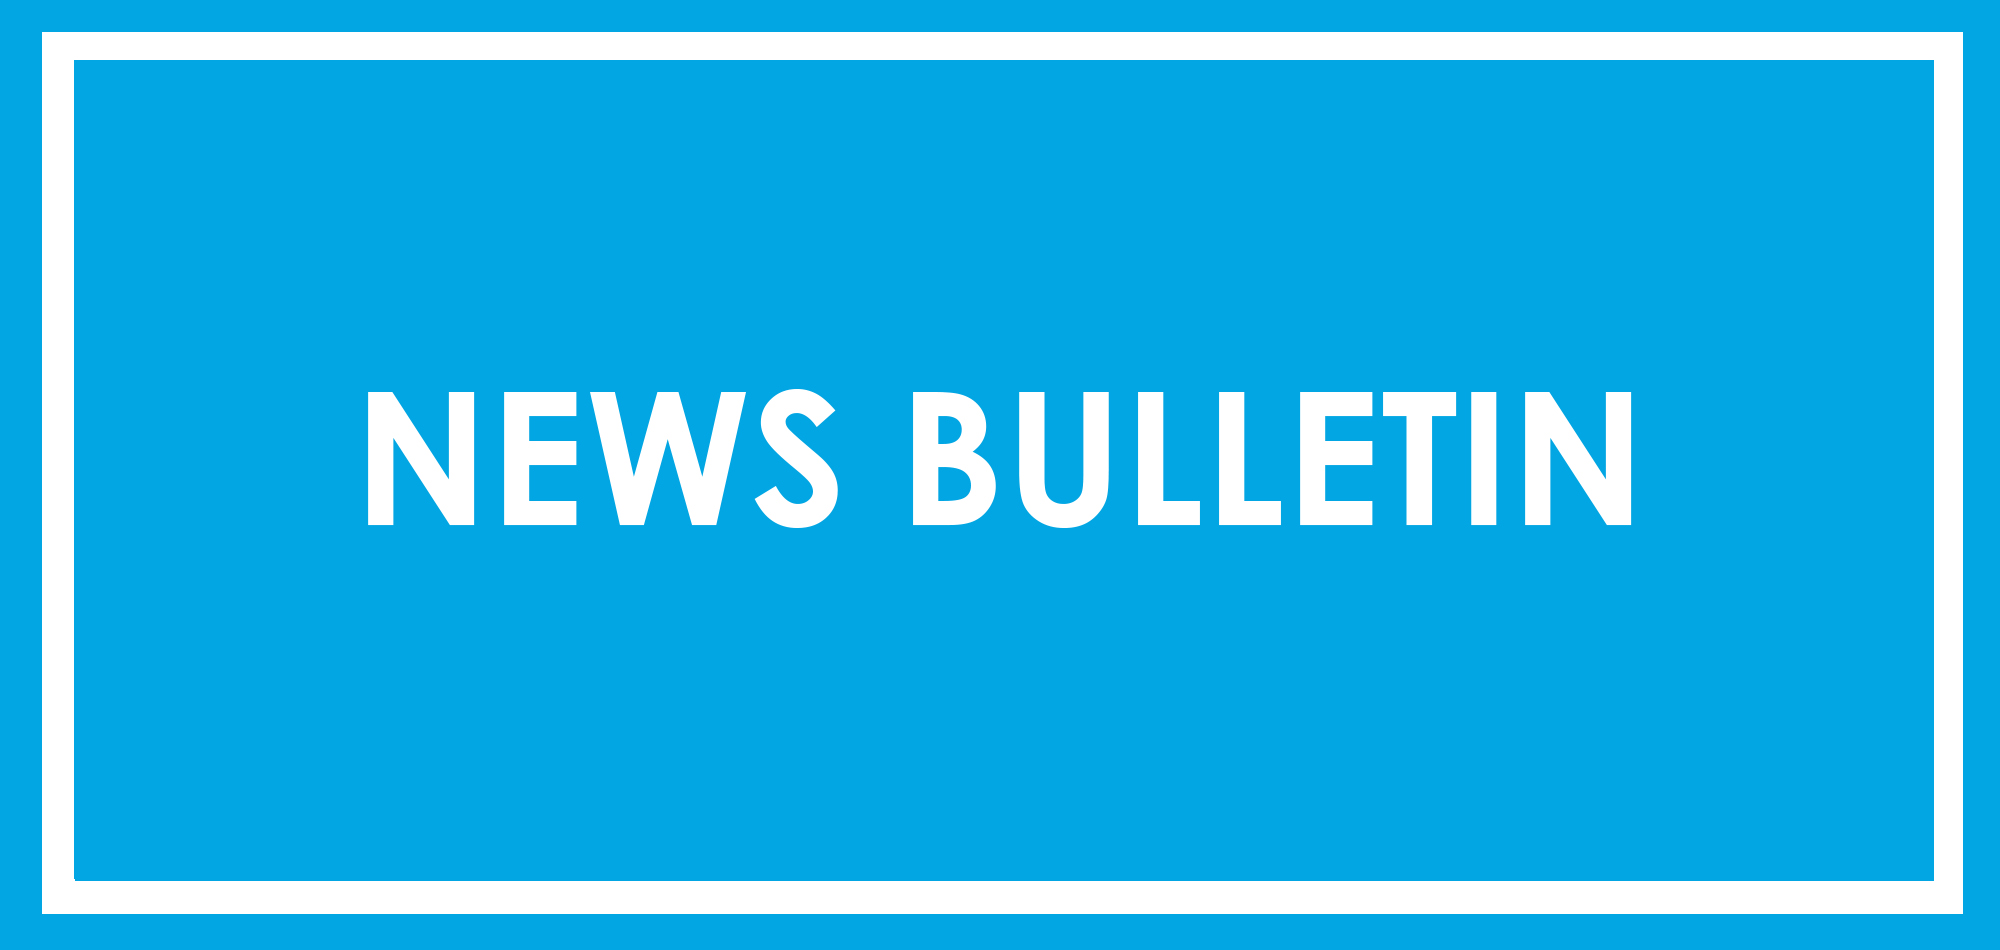 News Bulletin - 16.05.22